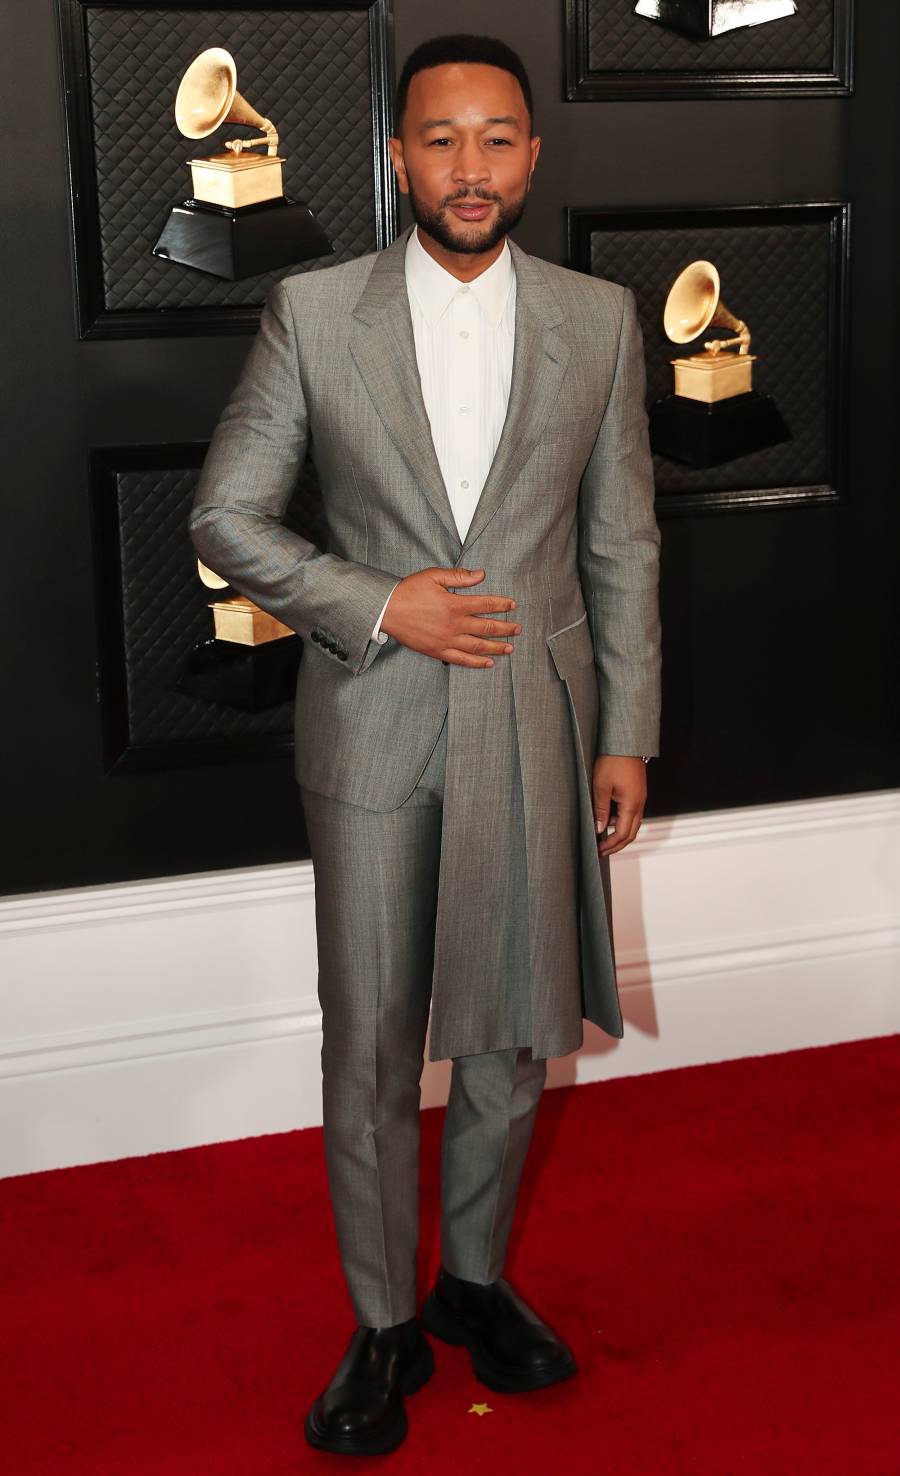 Grammy Awards 2020 Hottest Hunks - John Legend